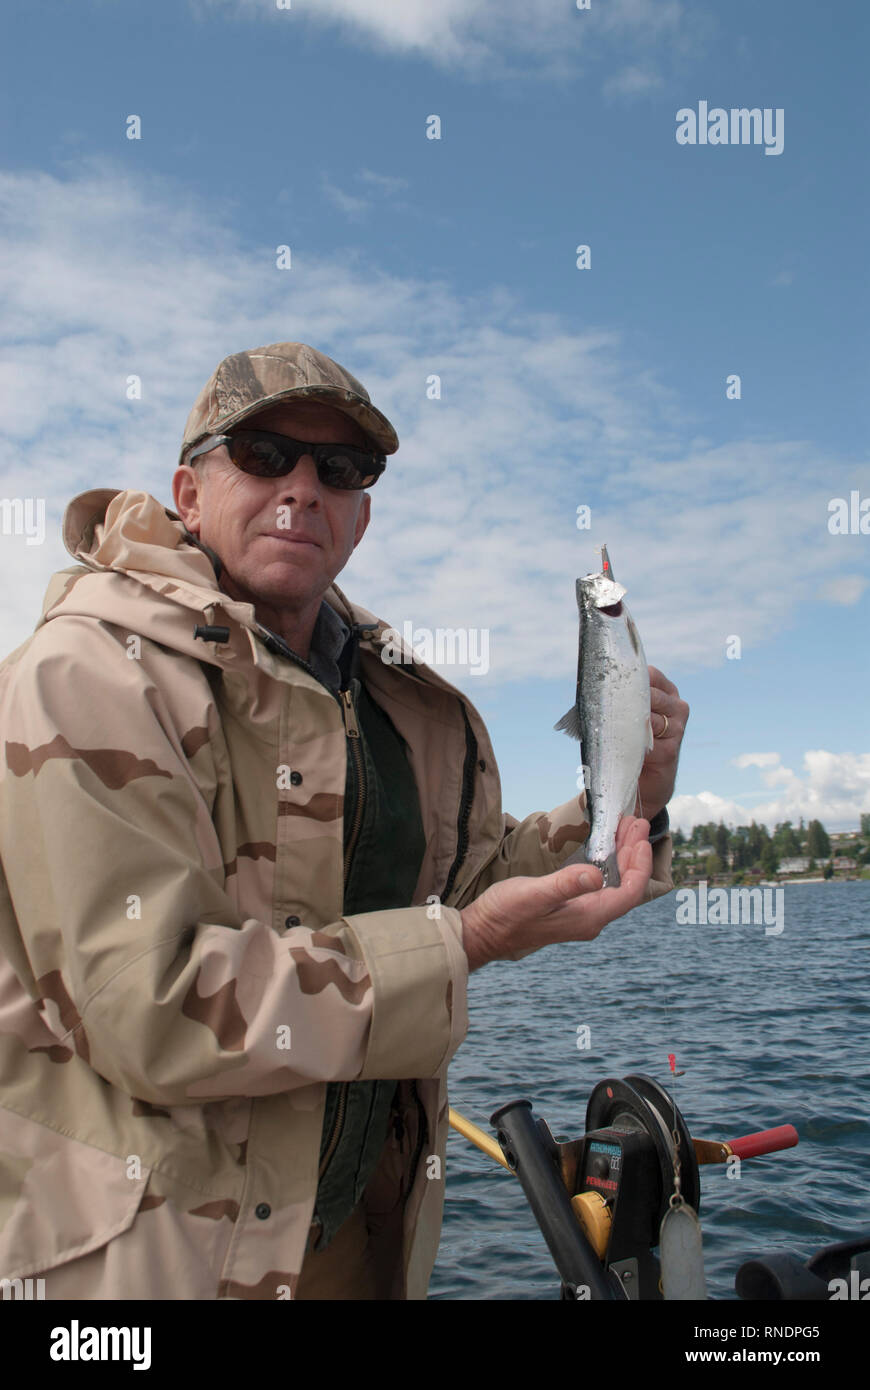 Doug Smith holds Kokanee caught in the Lake Stevens Kokanee Derby at Lake Stvfens,Washington. Stock Photo